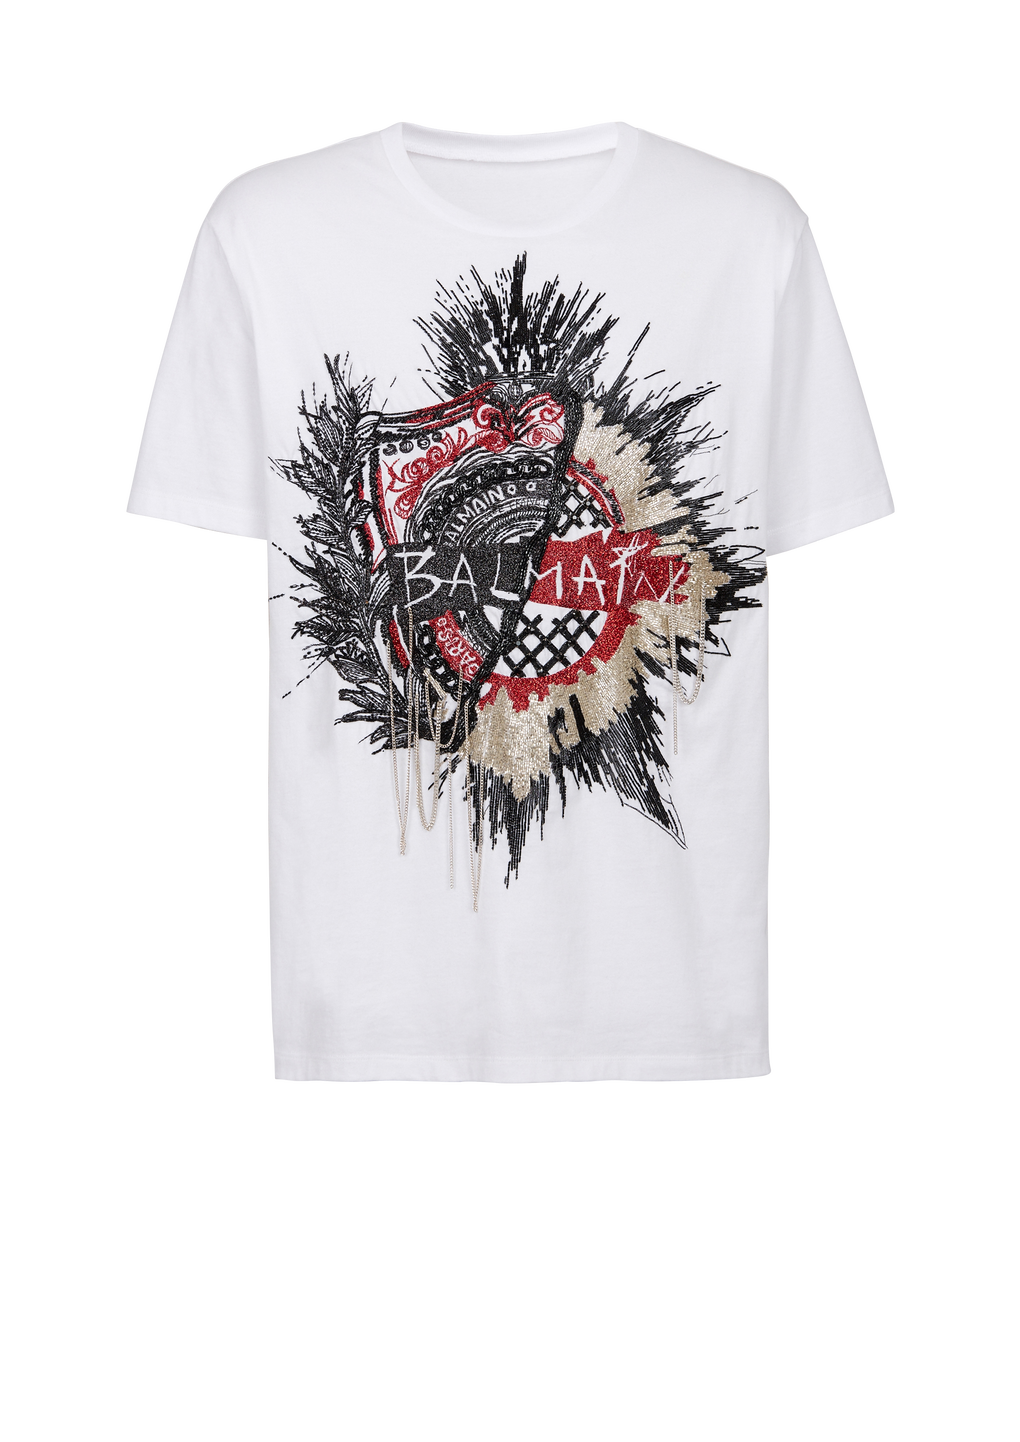 T-shirt oversize en coton brodé logo Balmain, blanc, hi-res